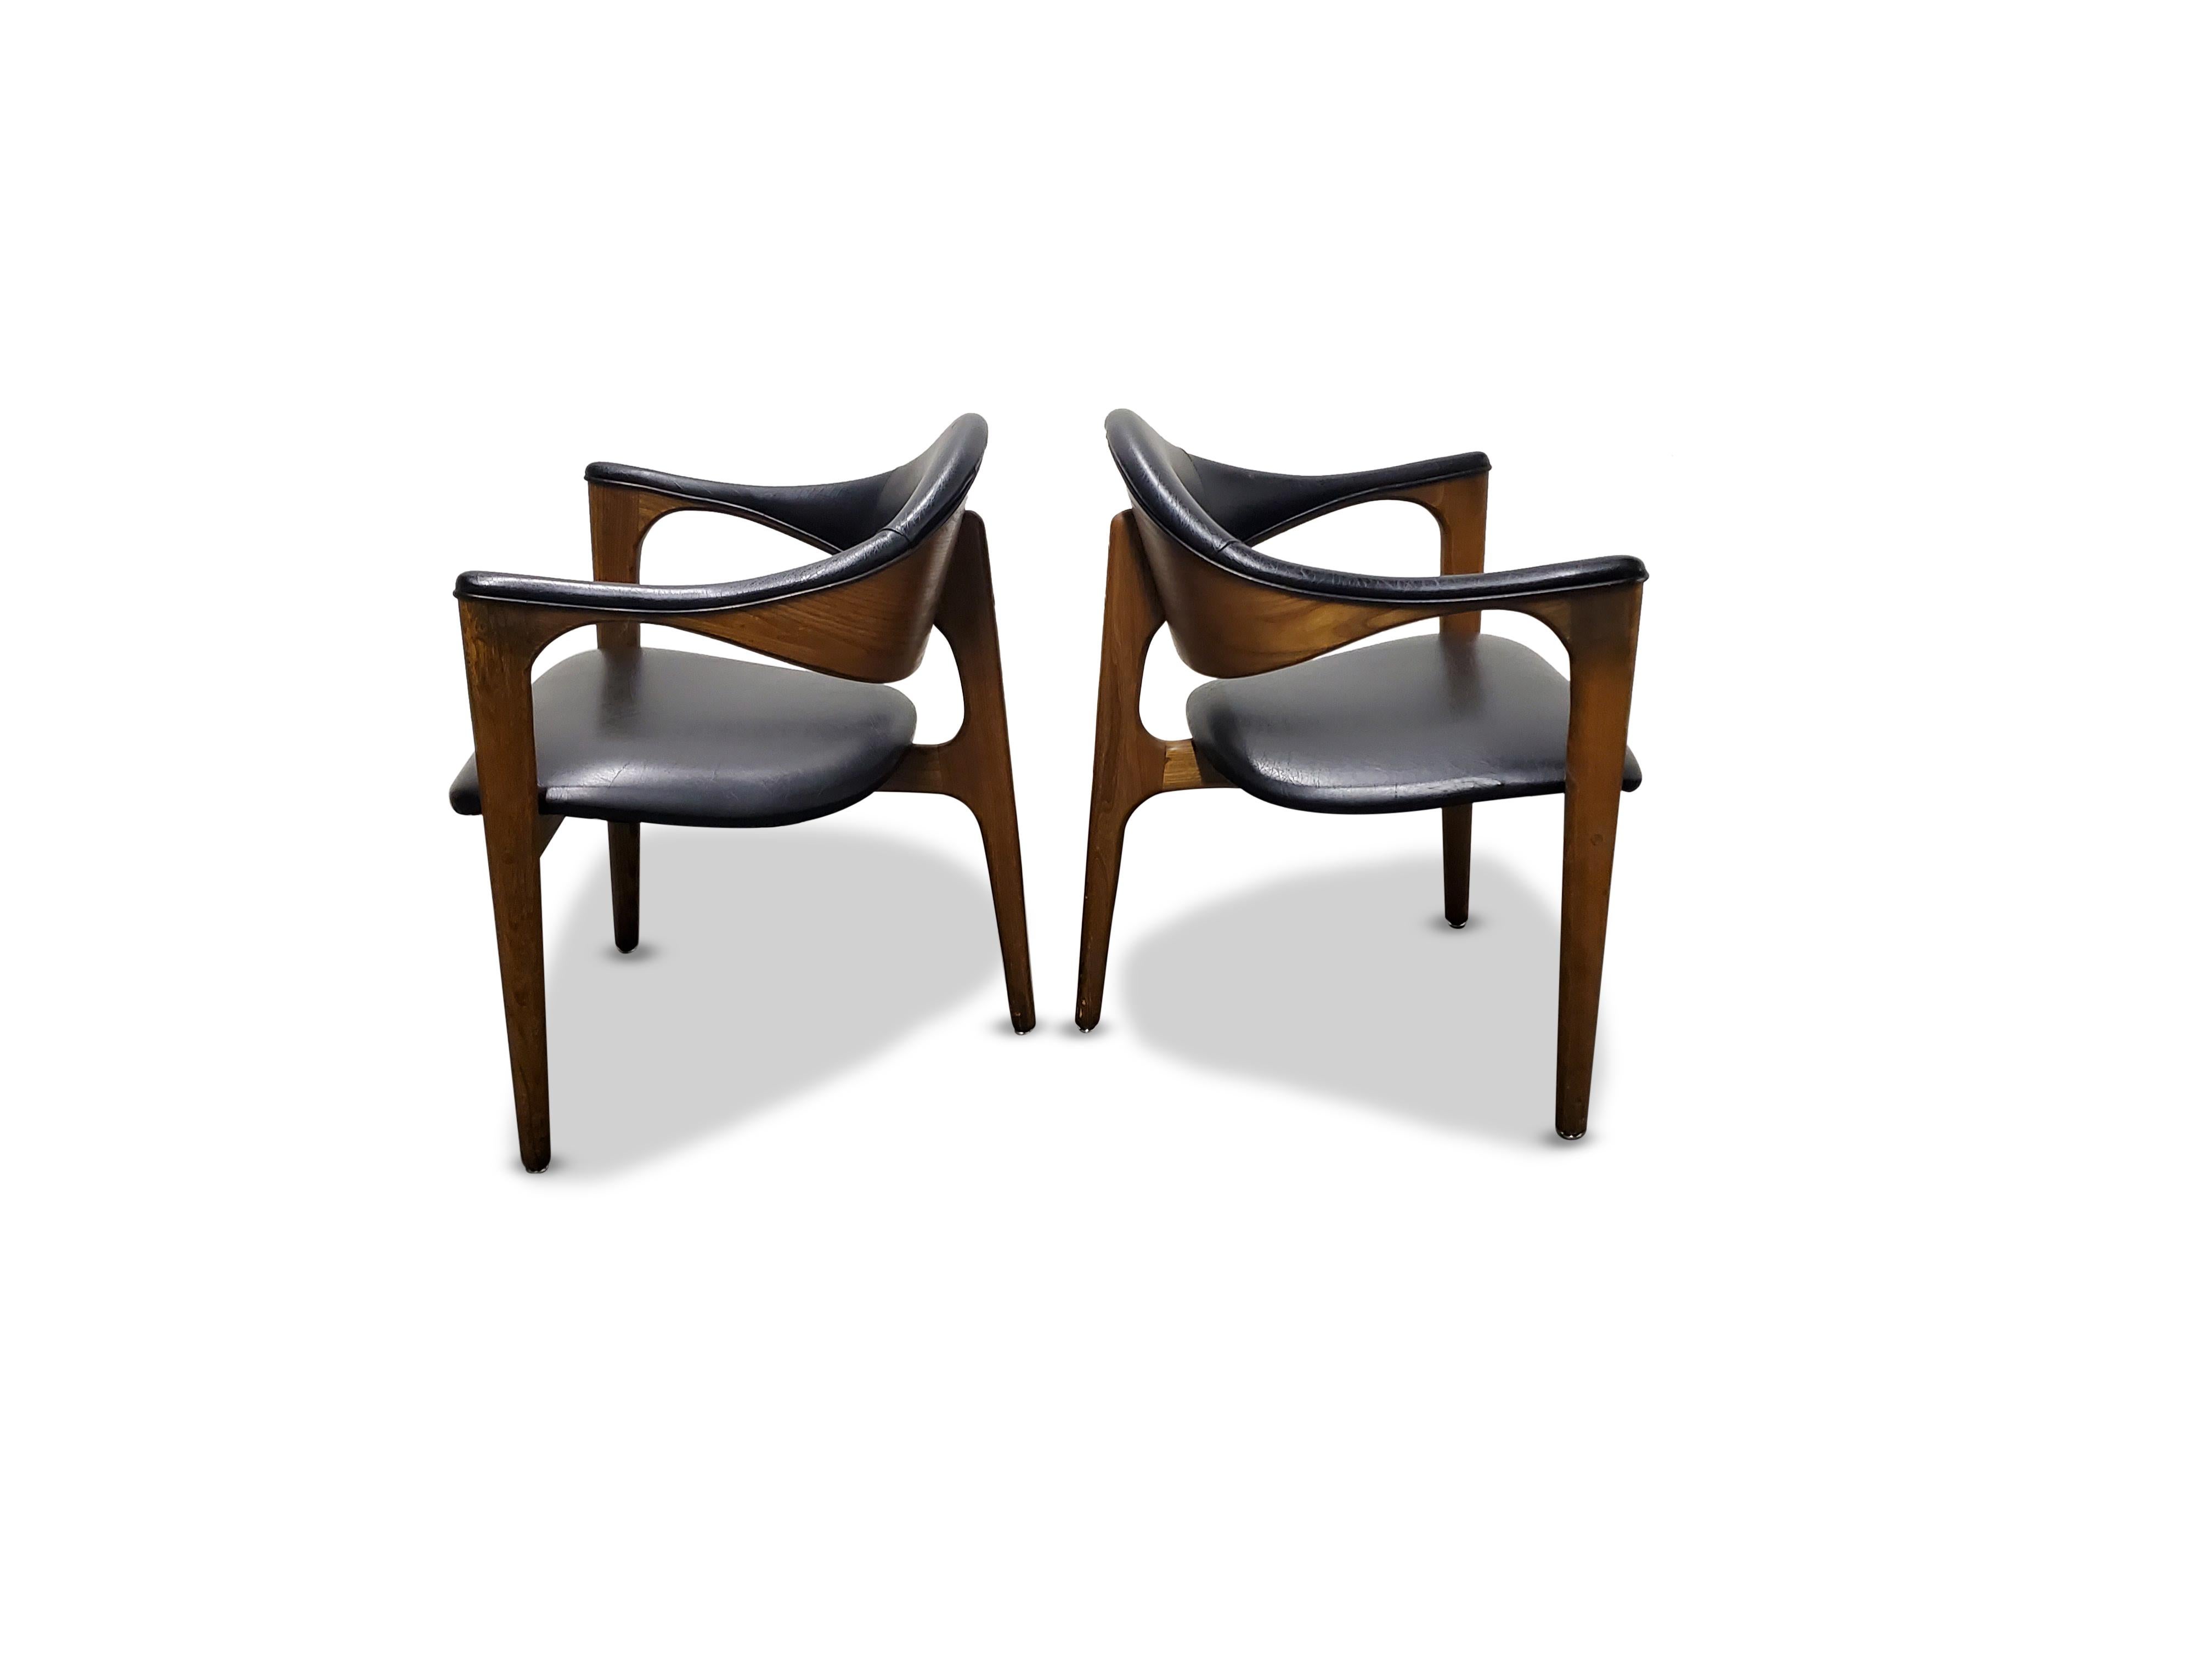 Pair of Mid-Century Modern Three-Legged Chairs 1